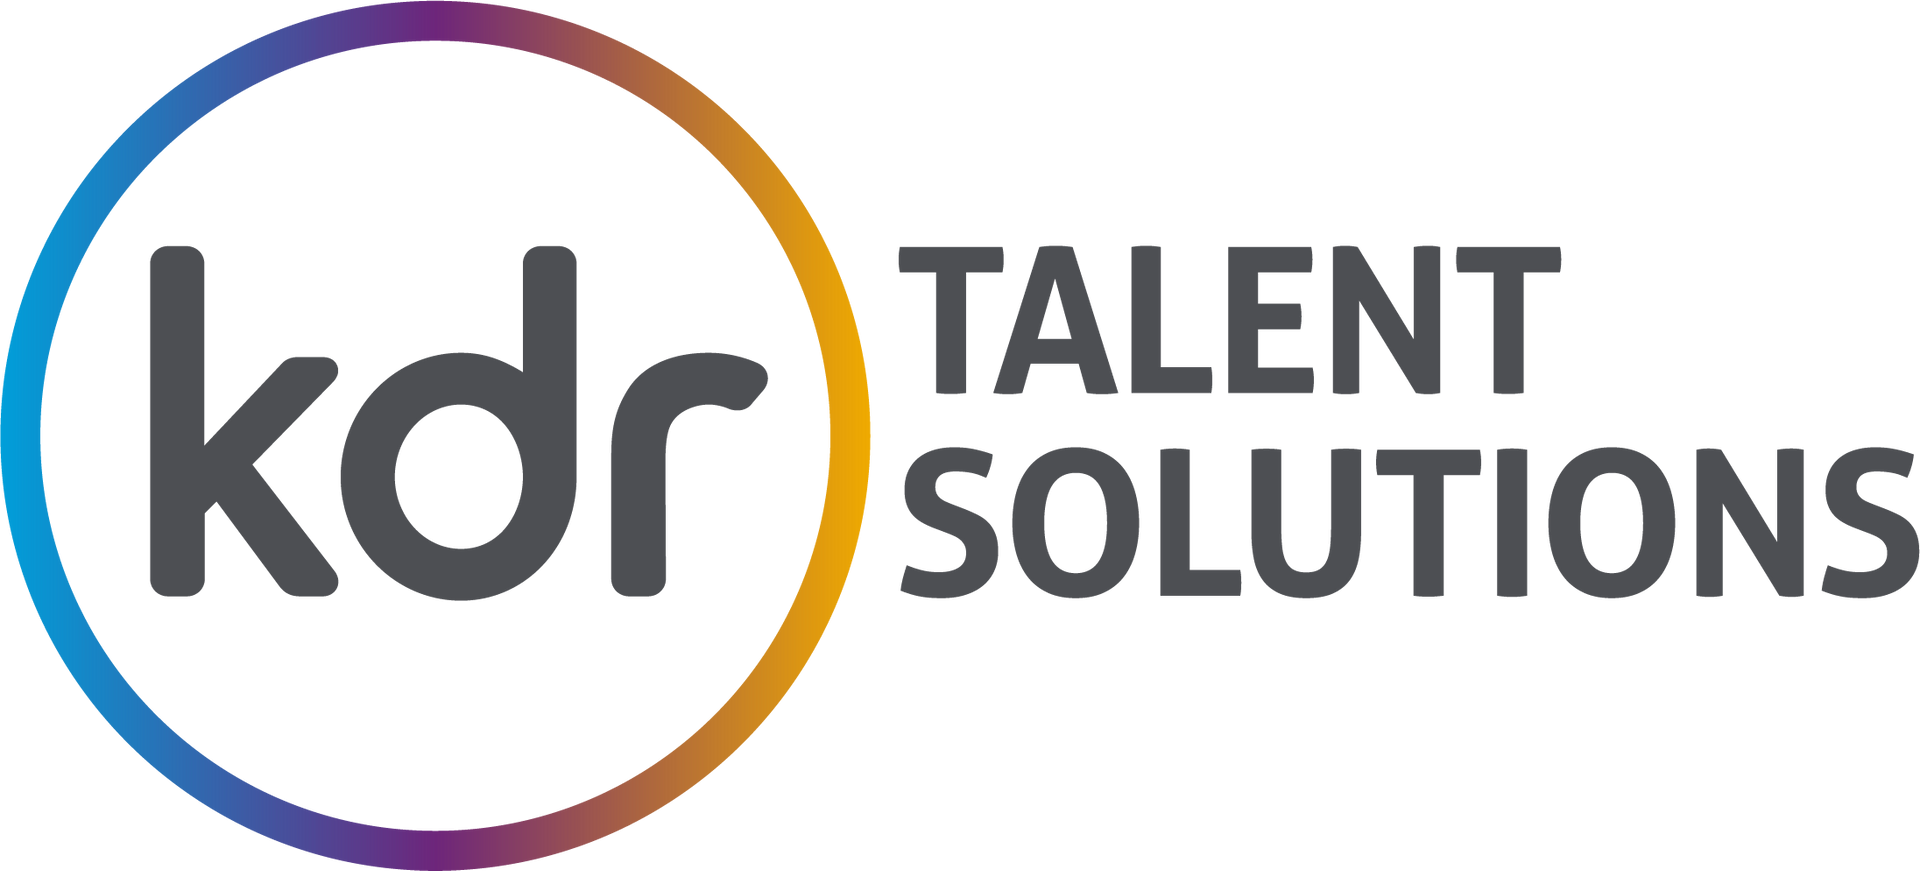 KDR Talent Solutions Logo